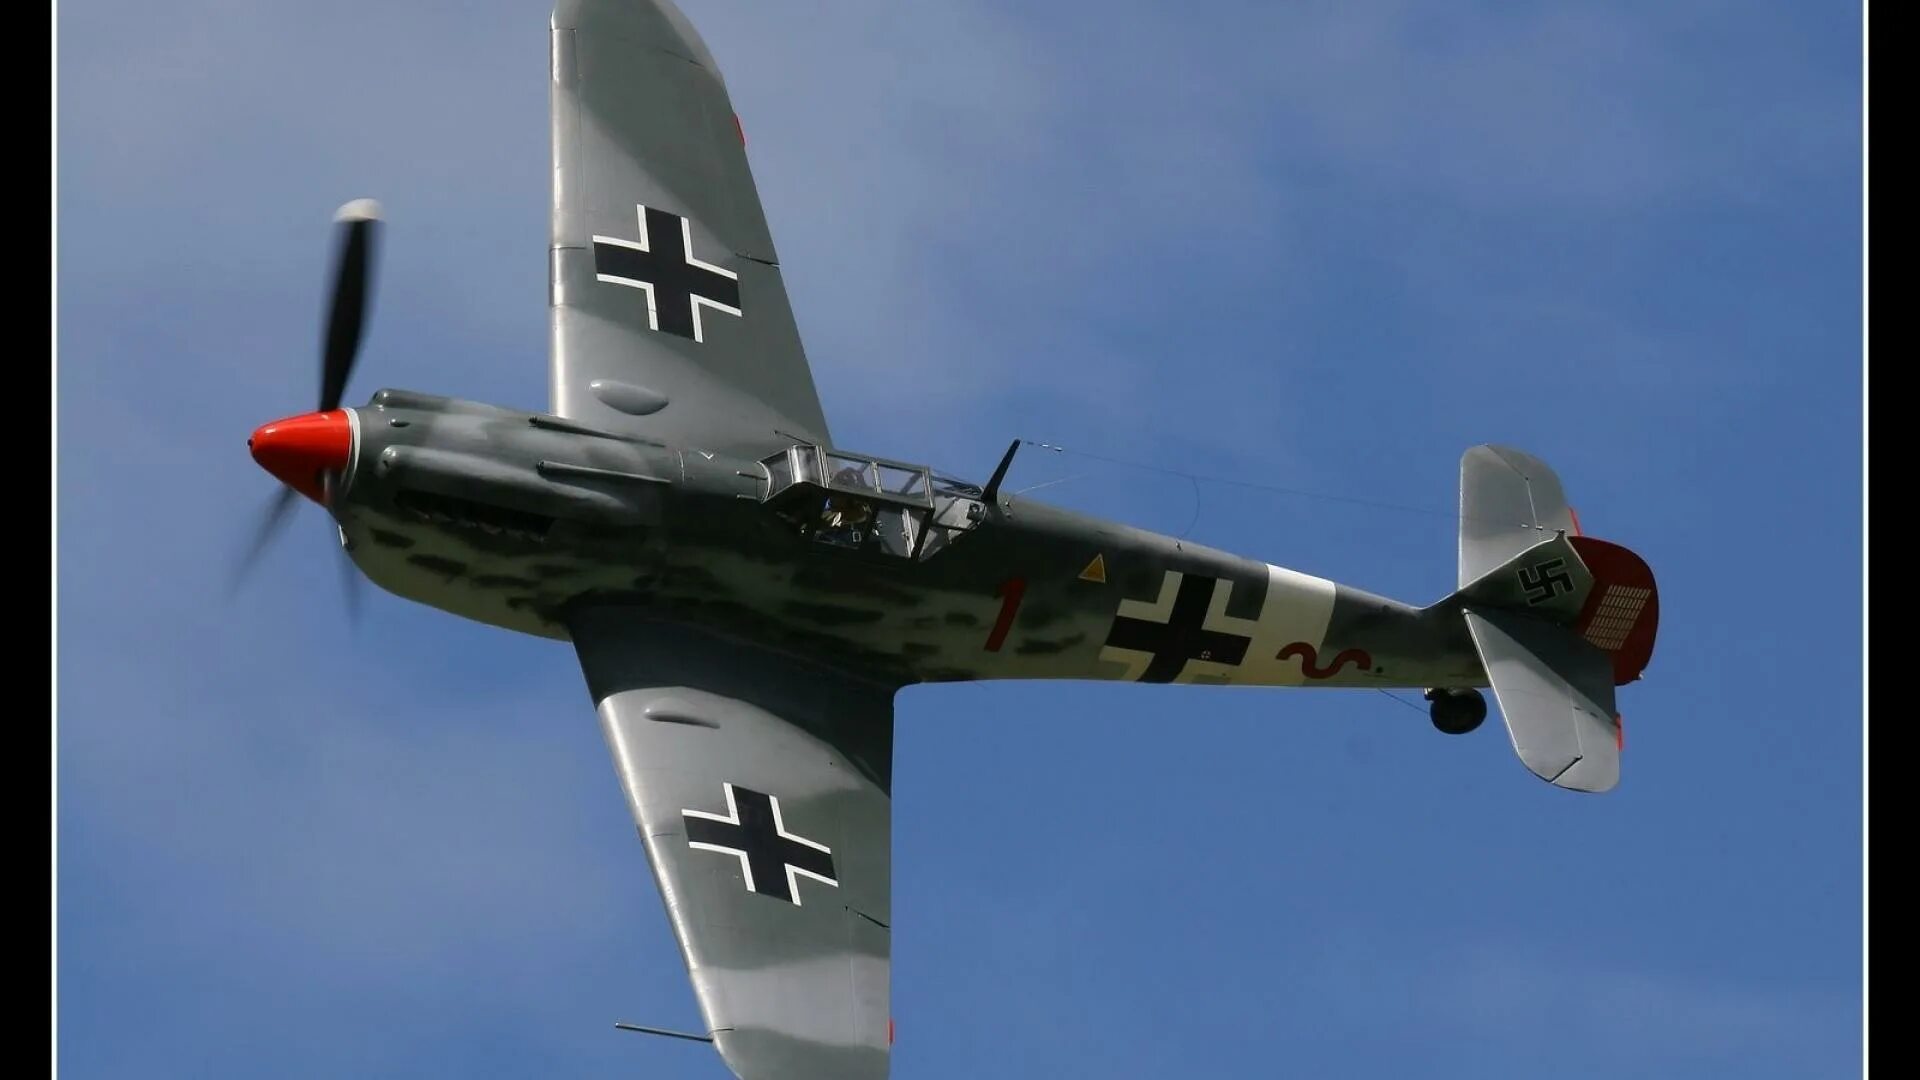 Мистер Шмит самолет 109. Самолет Мистер Шмидт. Bf 109x. Мессершмила чёрный крест.